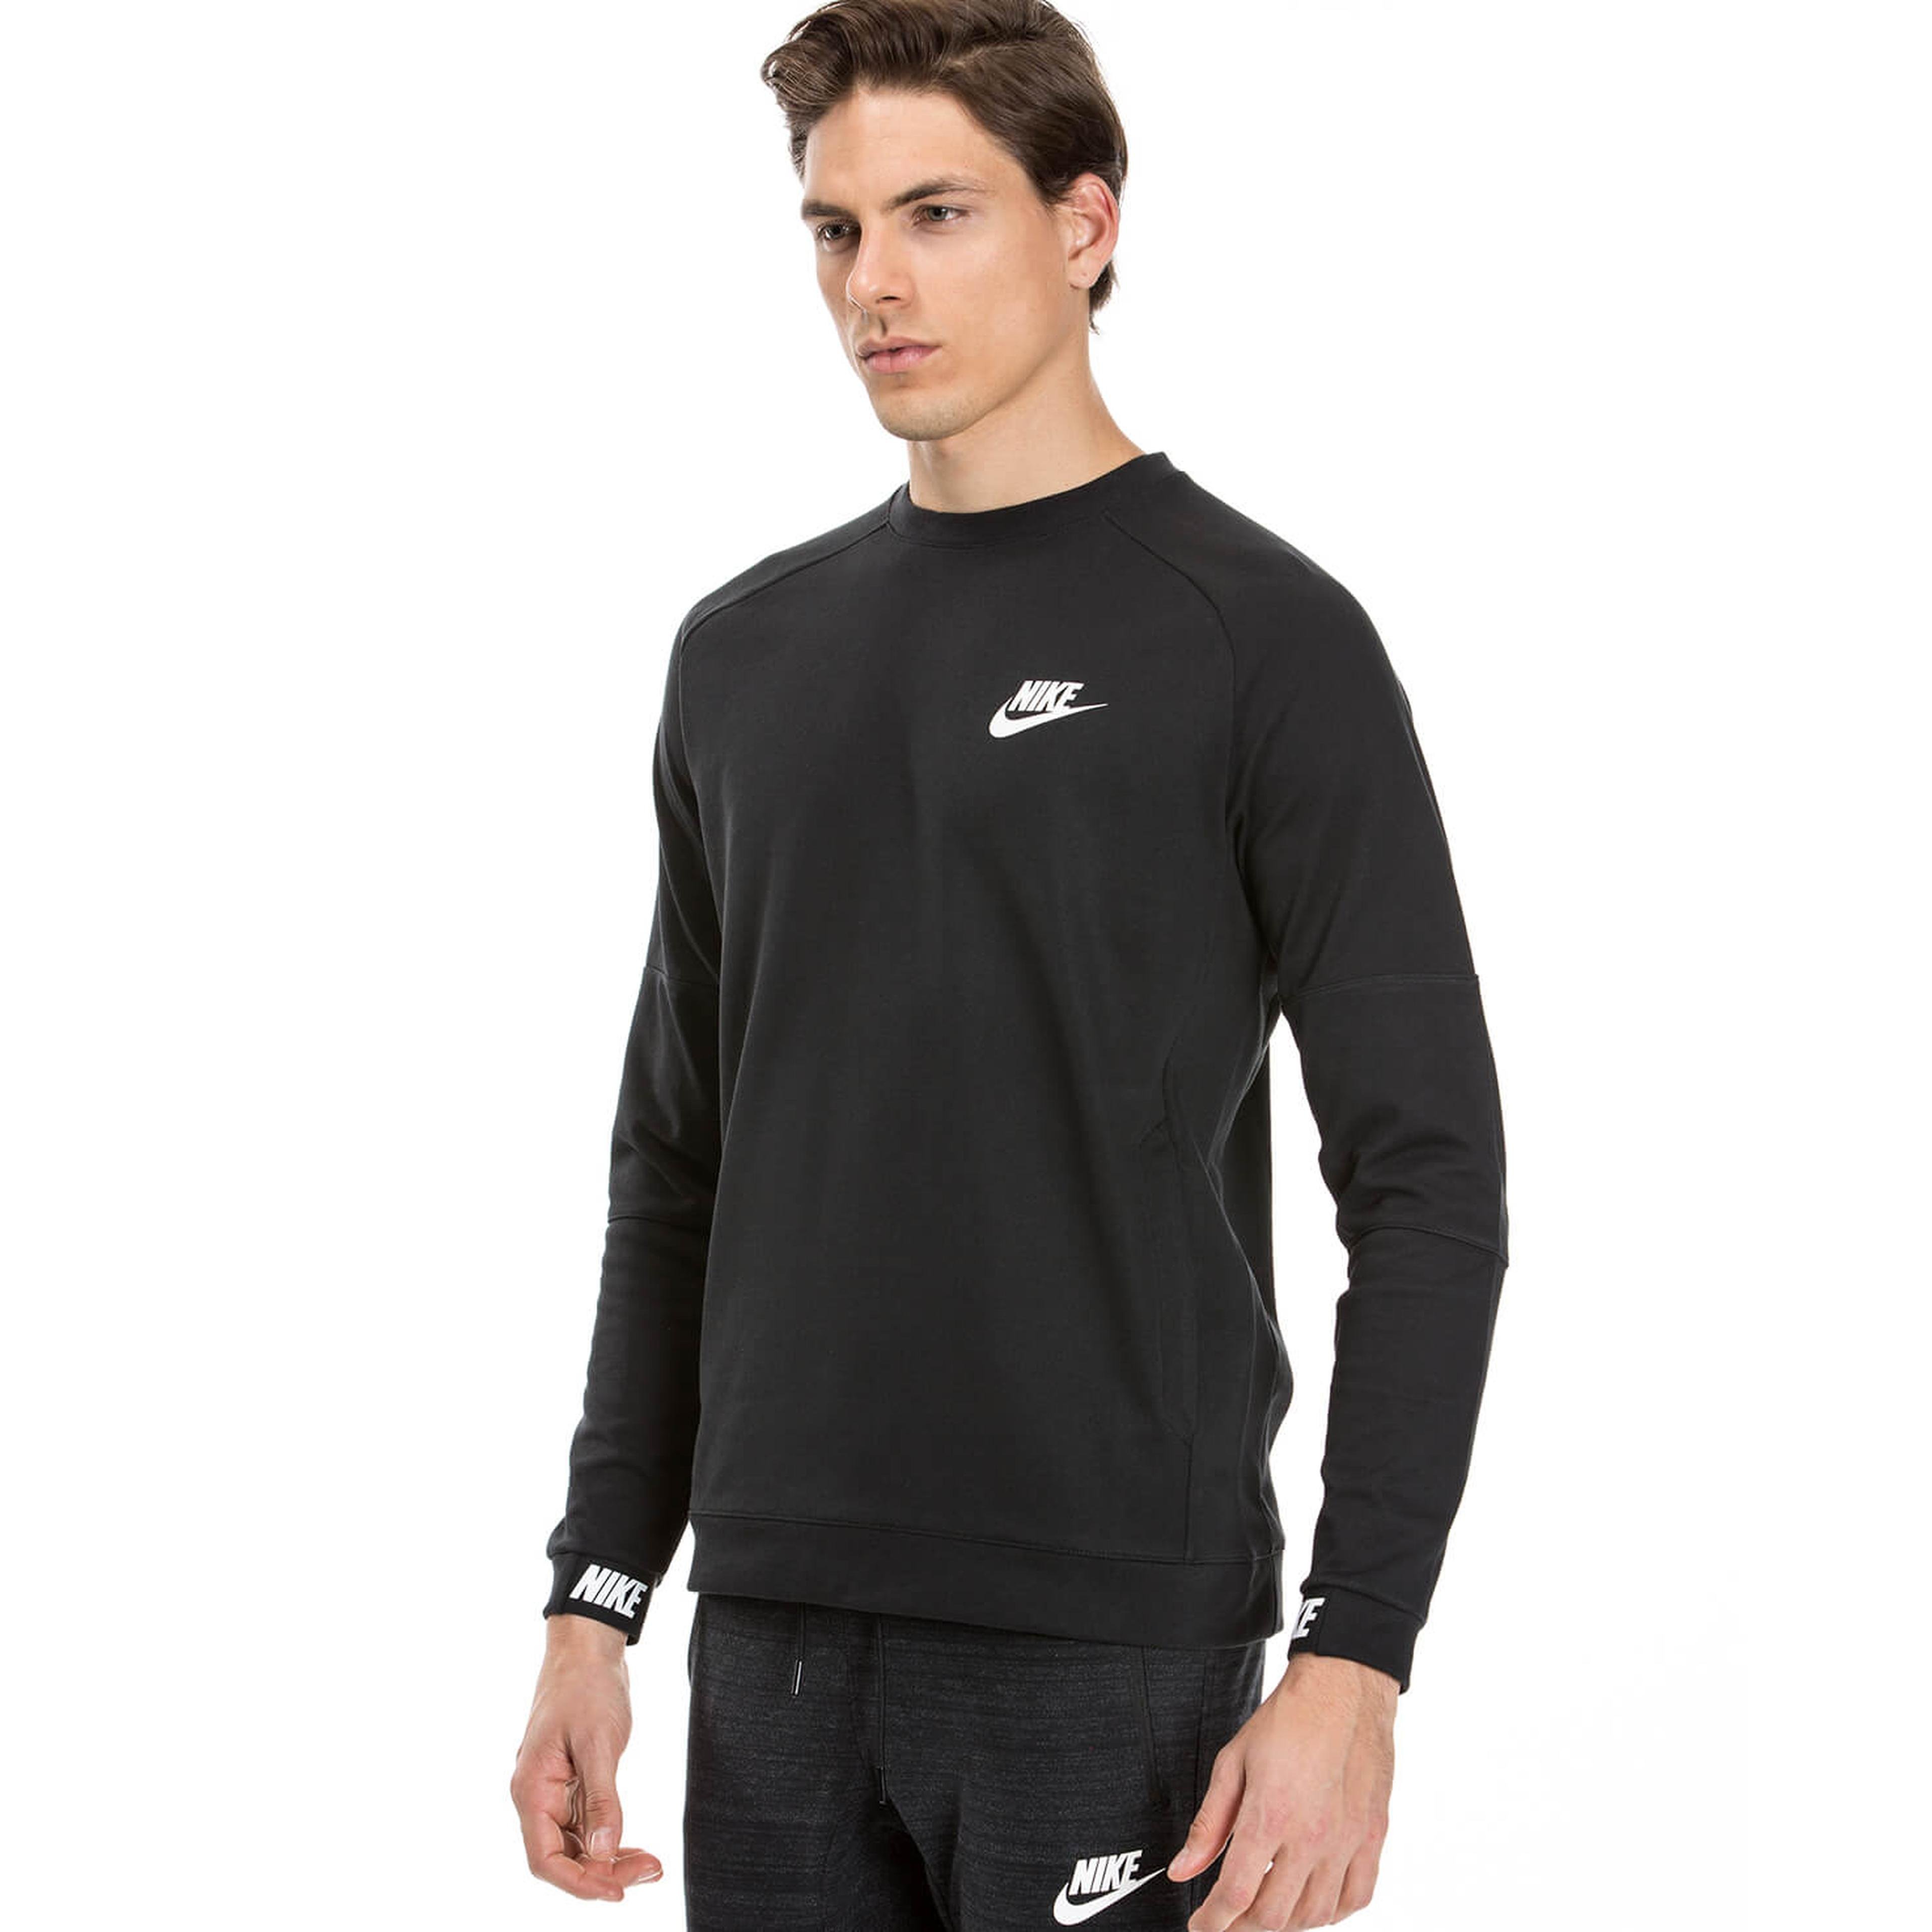 Nike Av15 Crw Flc Erkek Siyah Sweatshirt